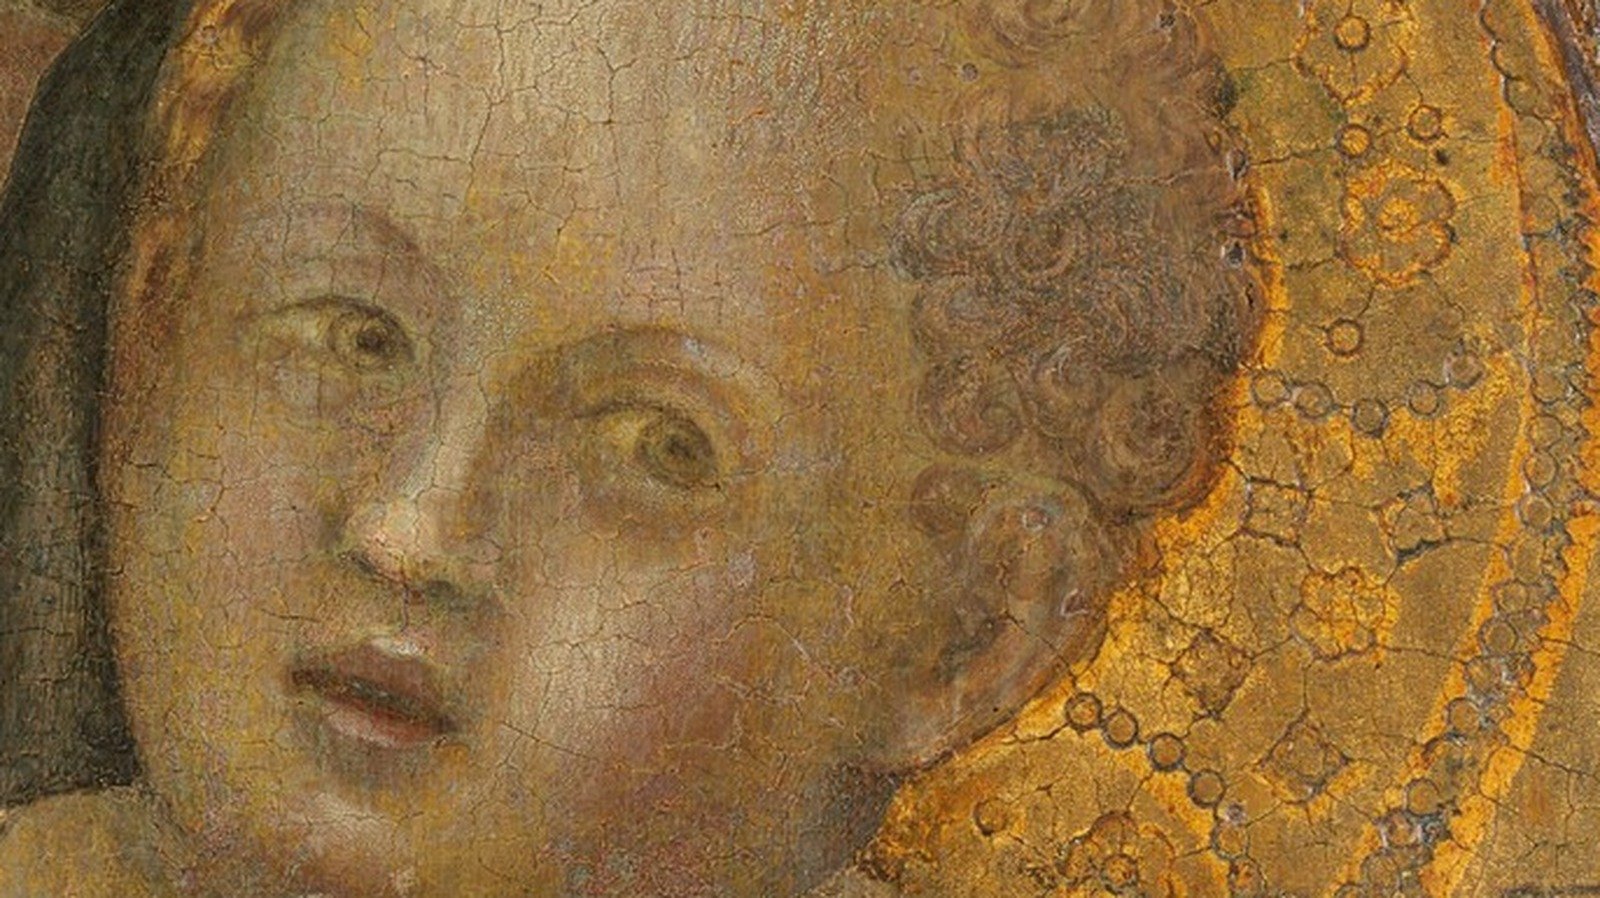 Why Babies In Medieval Art Look So Old